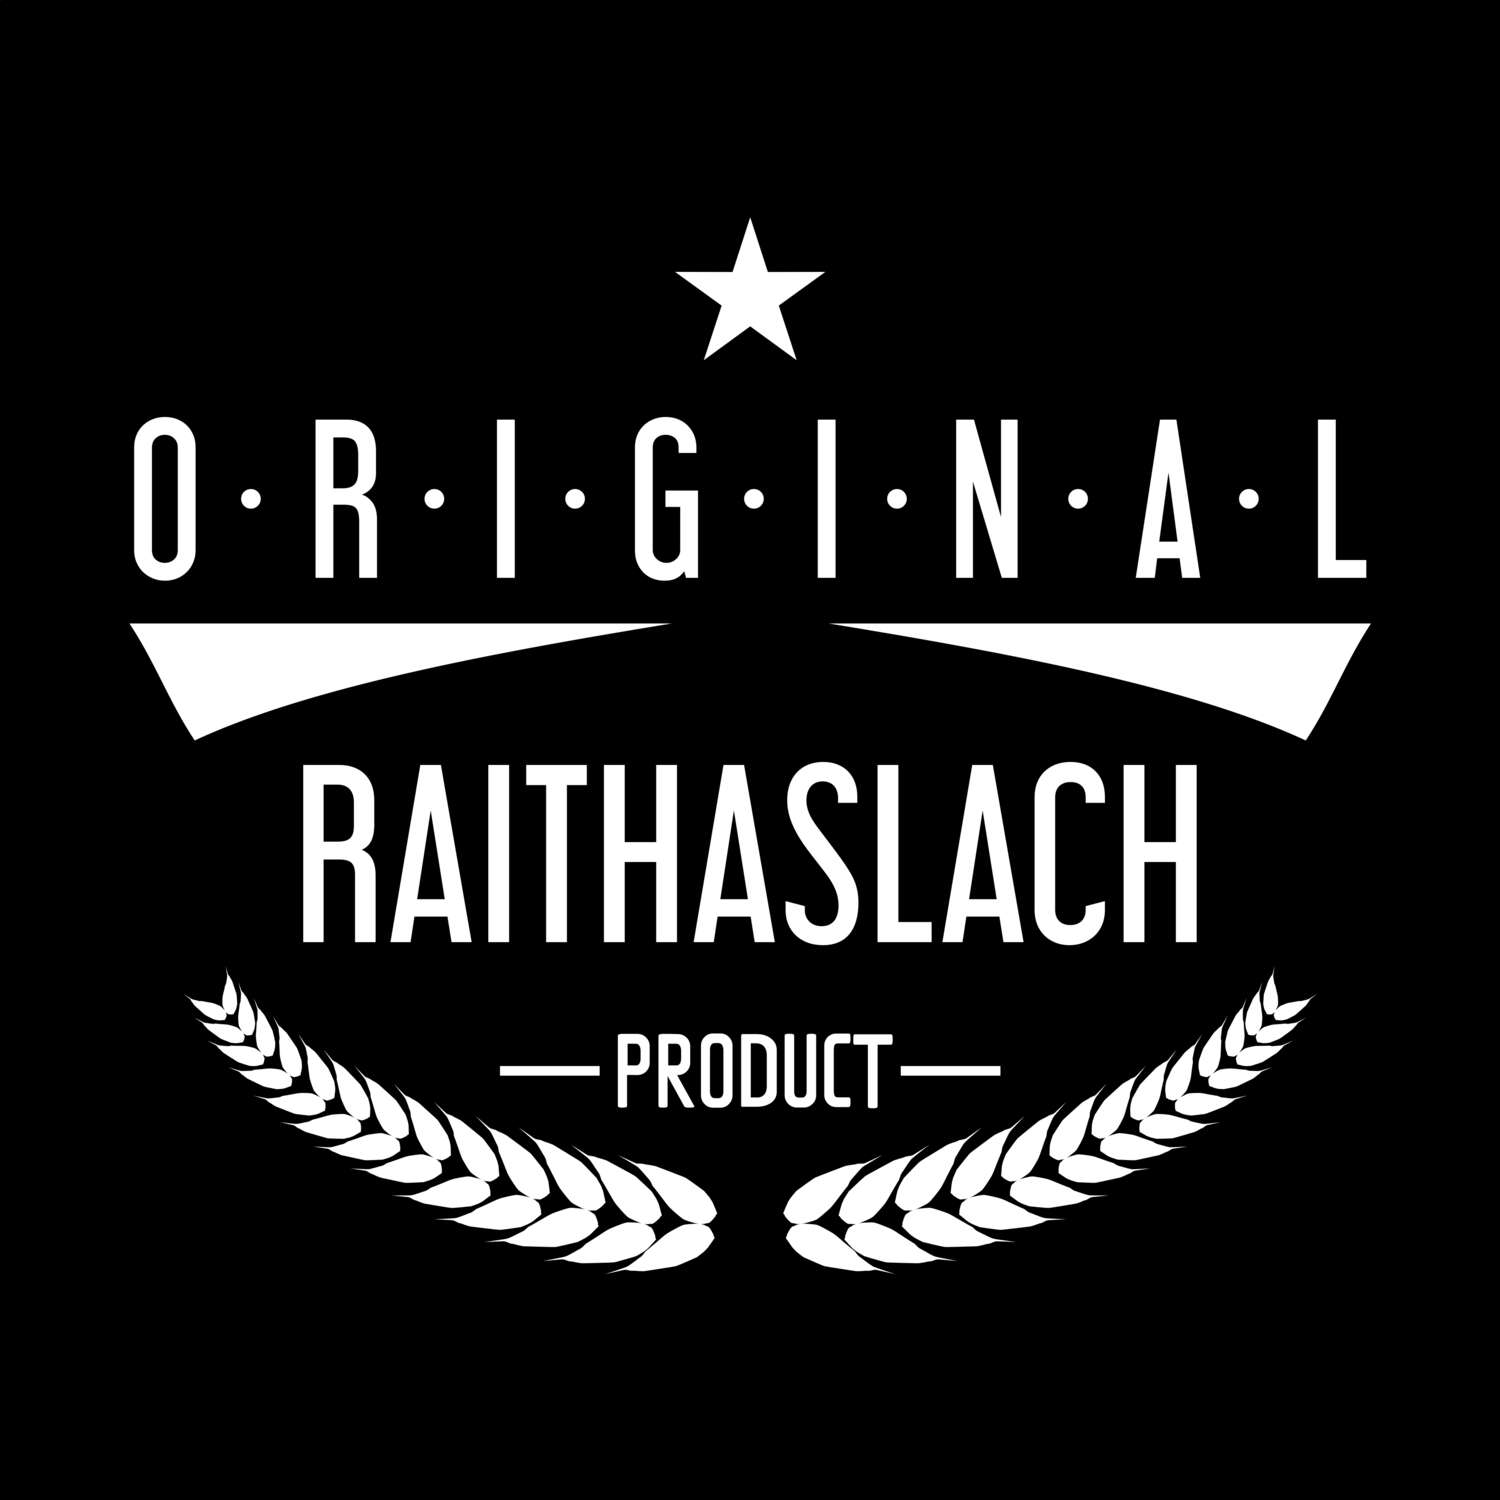 Raithaslach T-Shirt »Original Product«